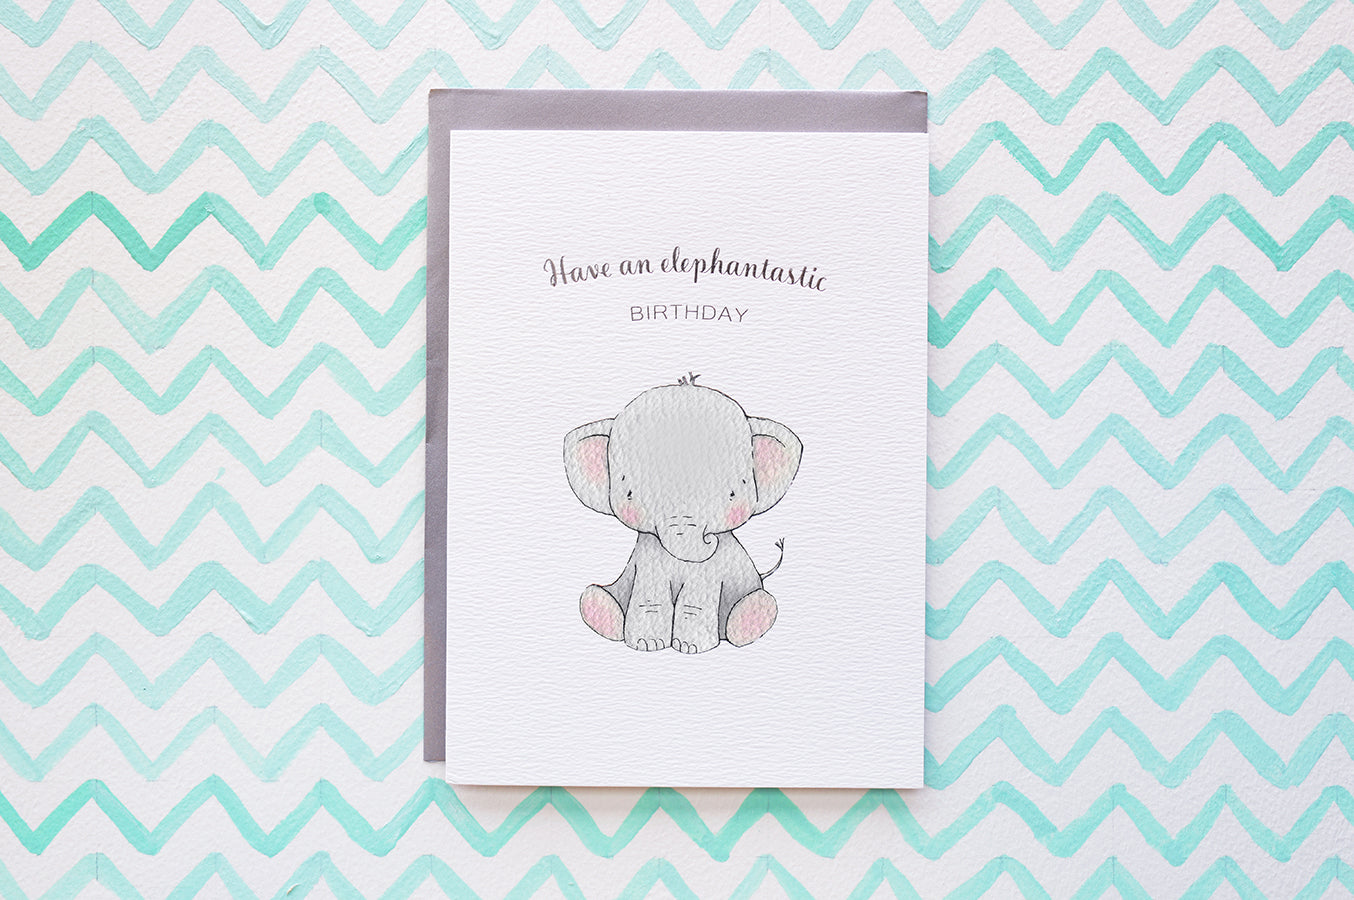 Elephantastic Children's Birthday Card